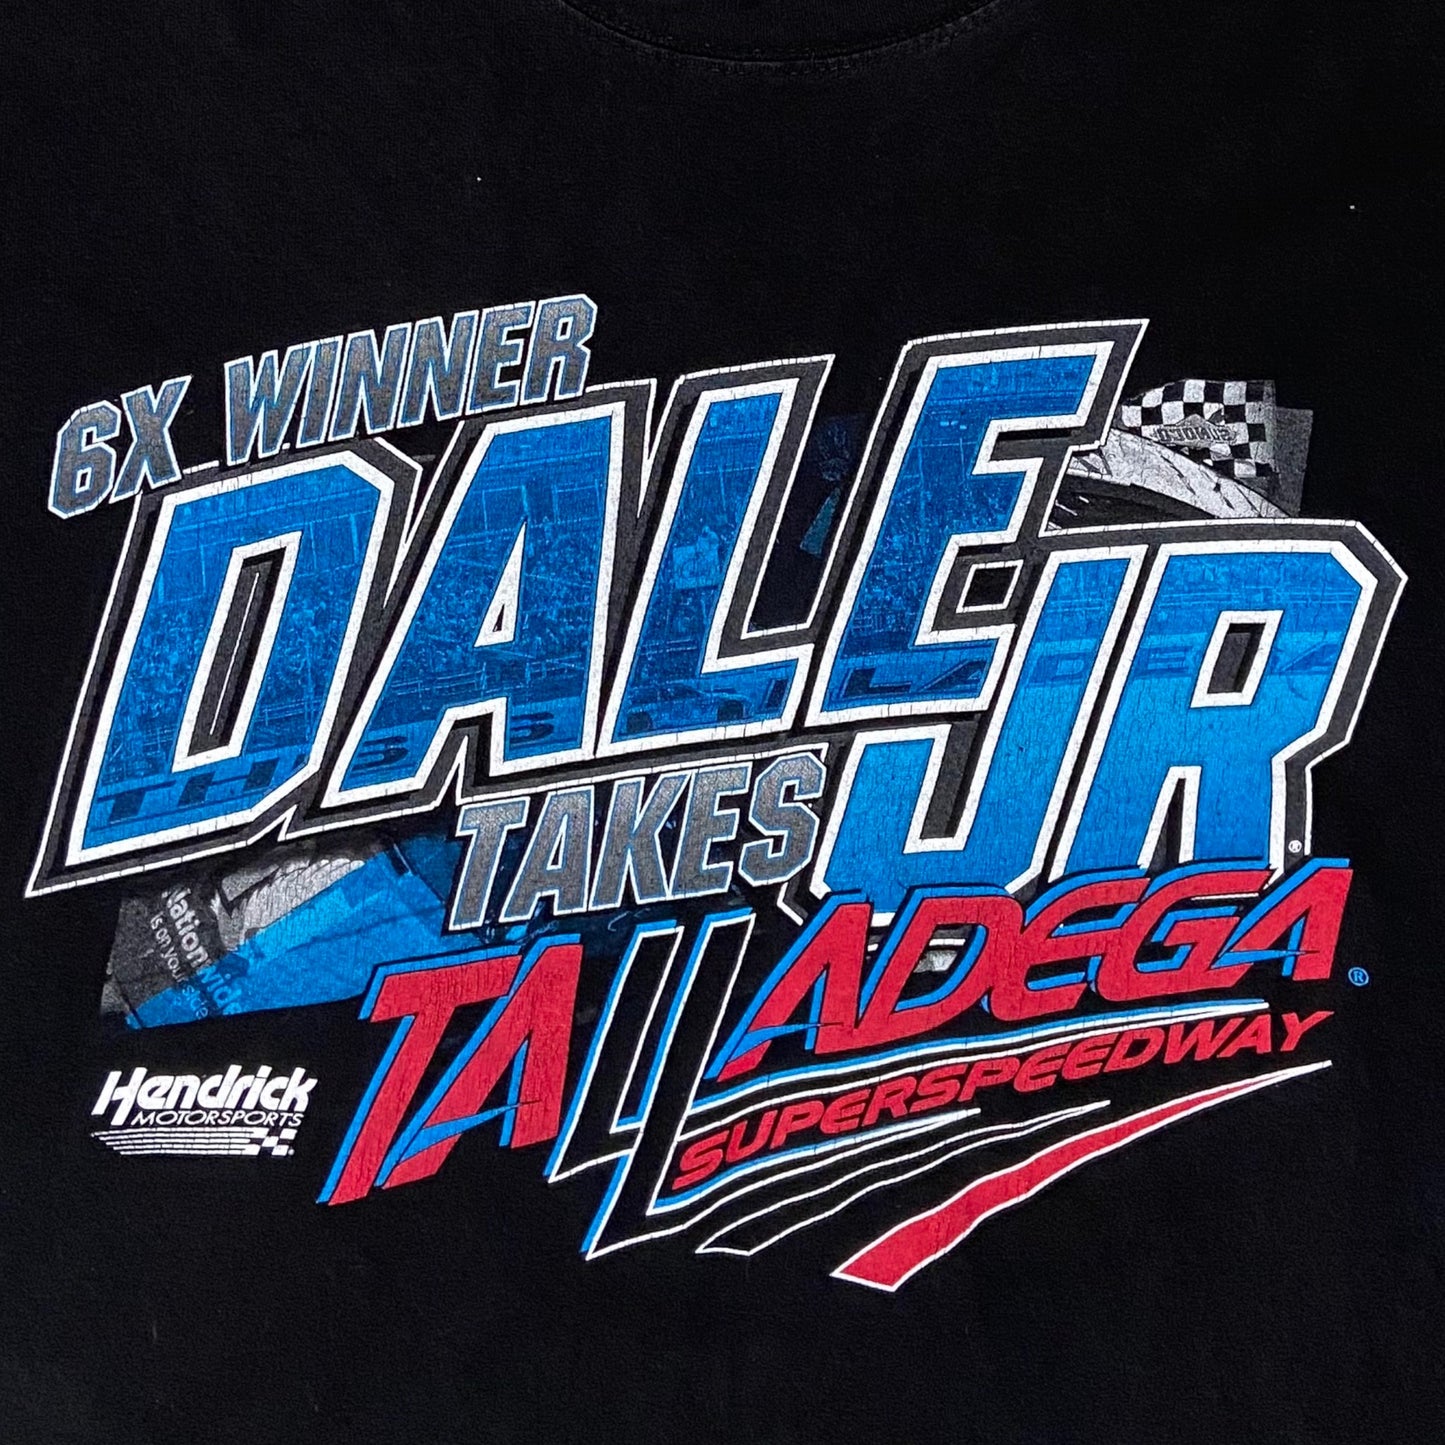 Dale Jr Talladega win t-shirt - M